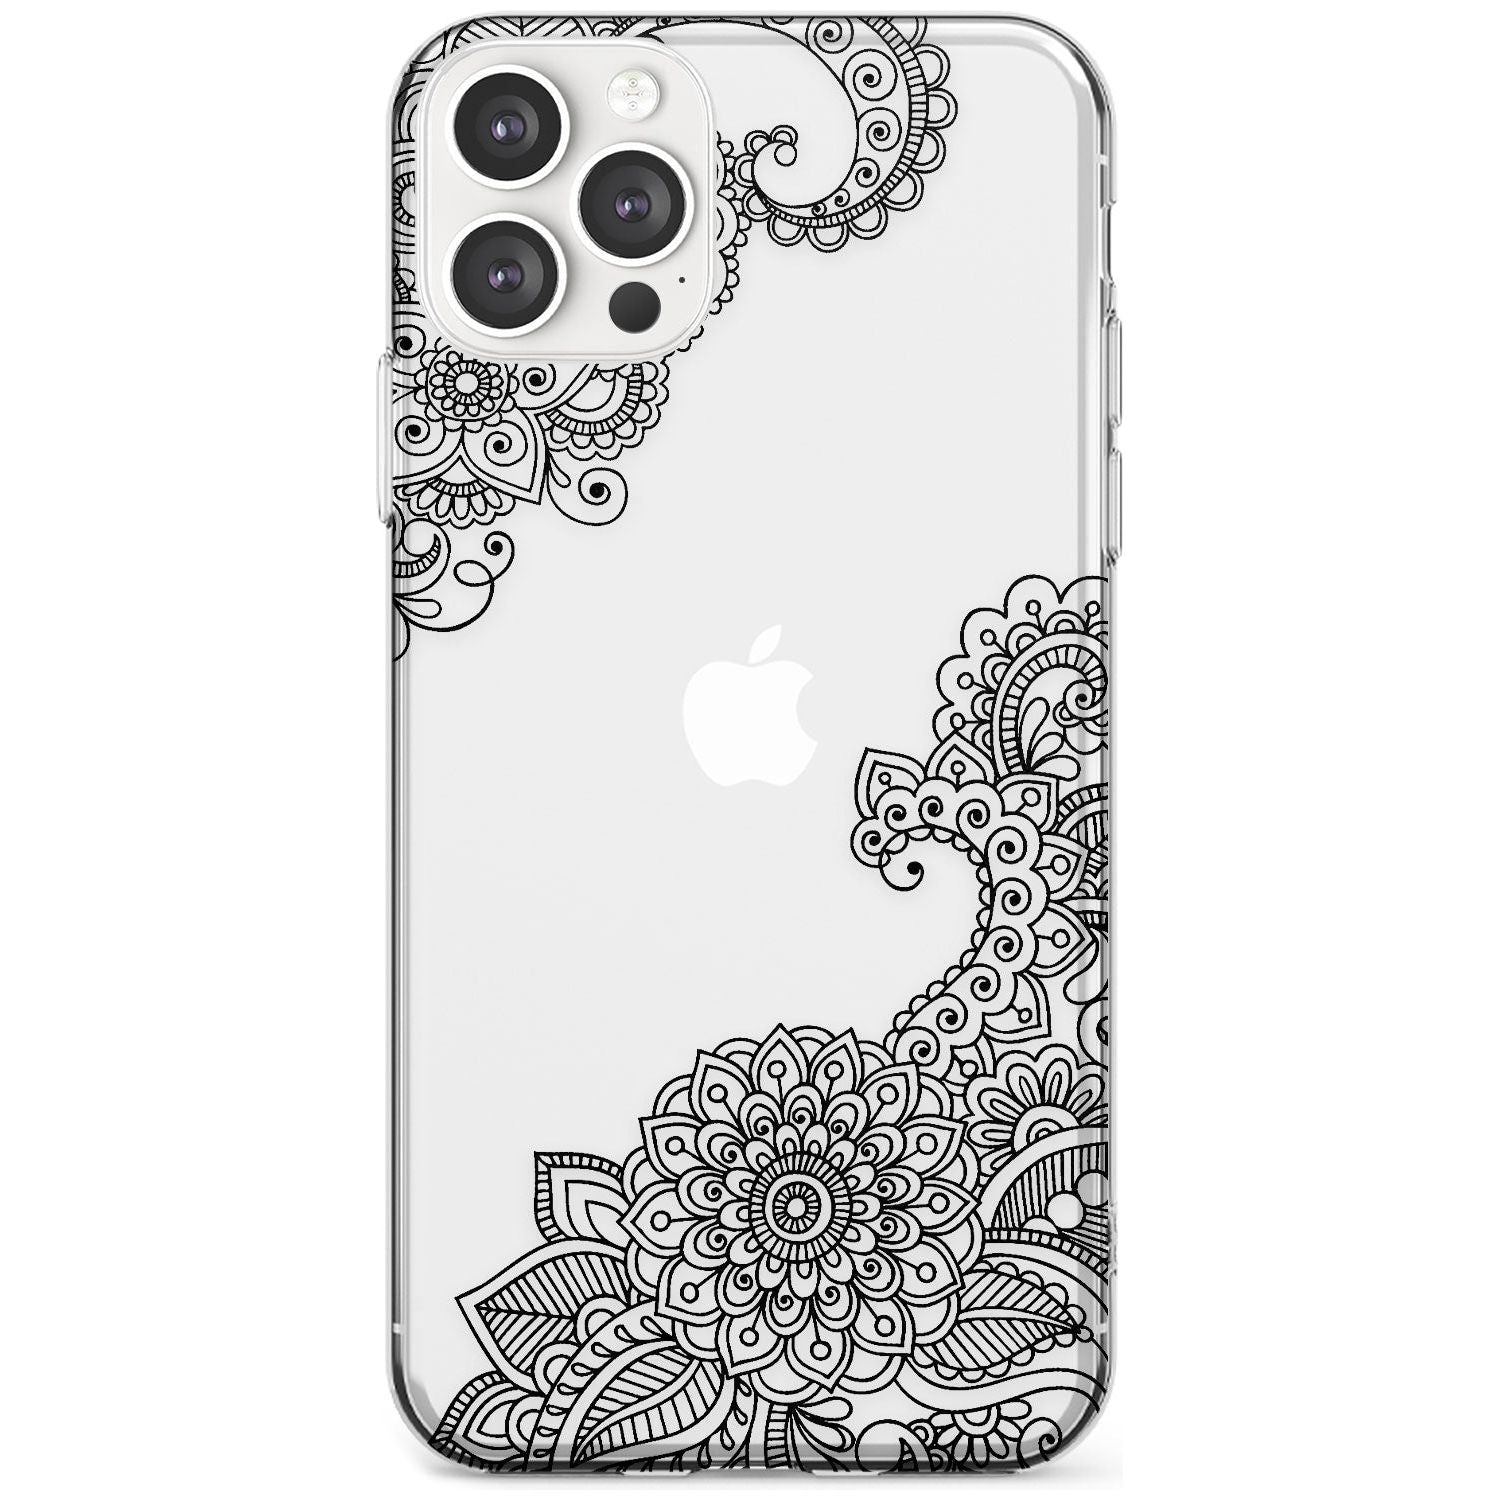 Black Henna Botanicals Slim TPU Phone Case for iPhone 11 Pro Max